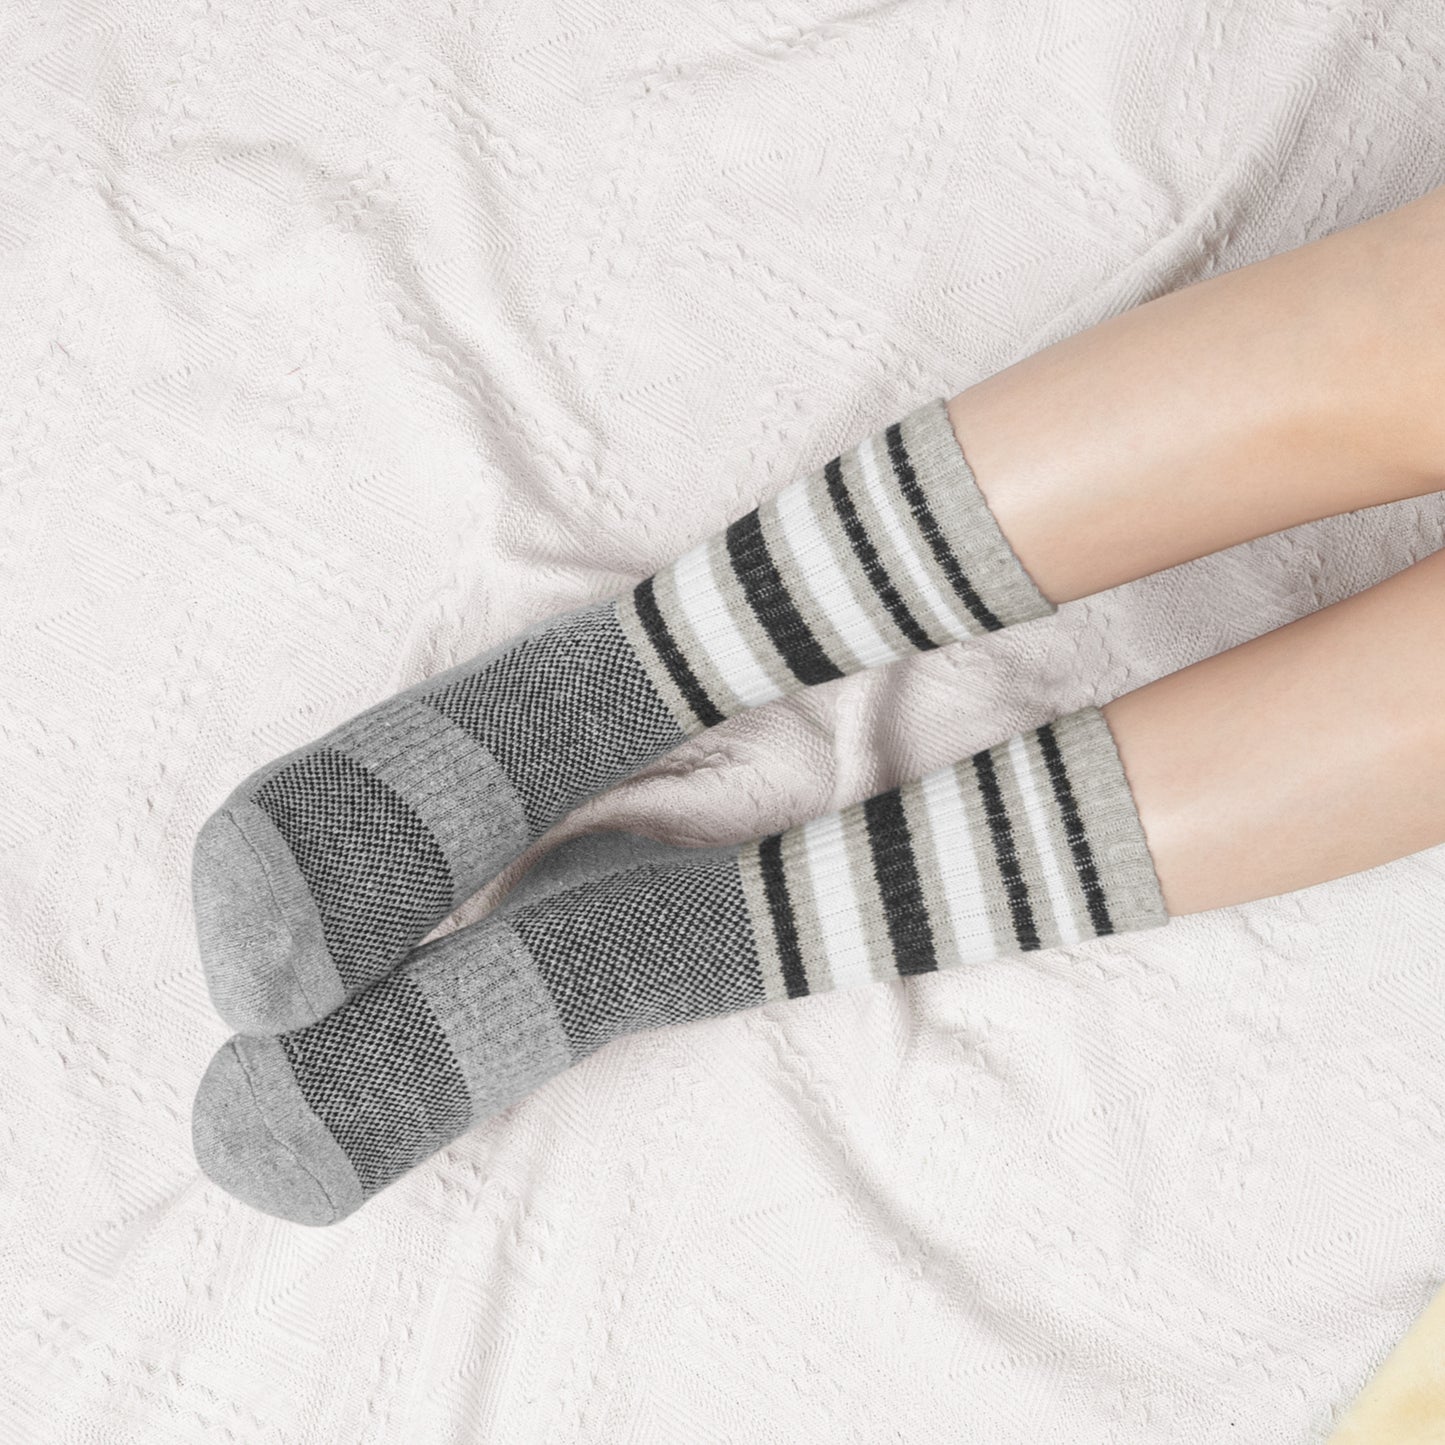 Loritta Wool Hiking Socks for Women Thermal Winter Warm Boot Work Cushion Socks 10 Pairs